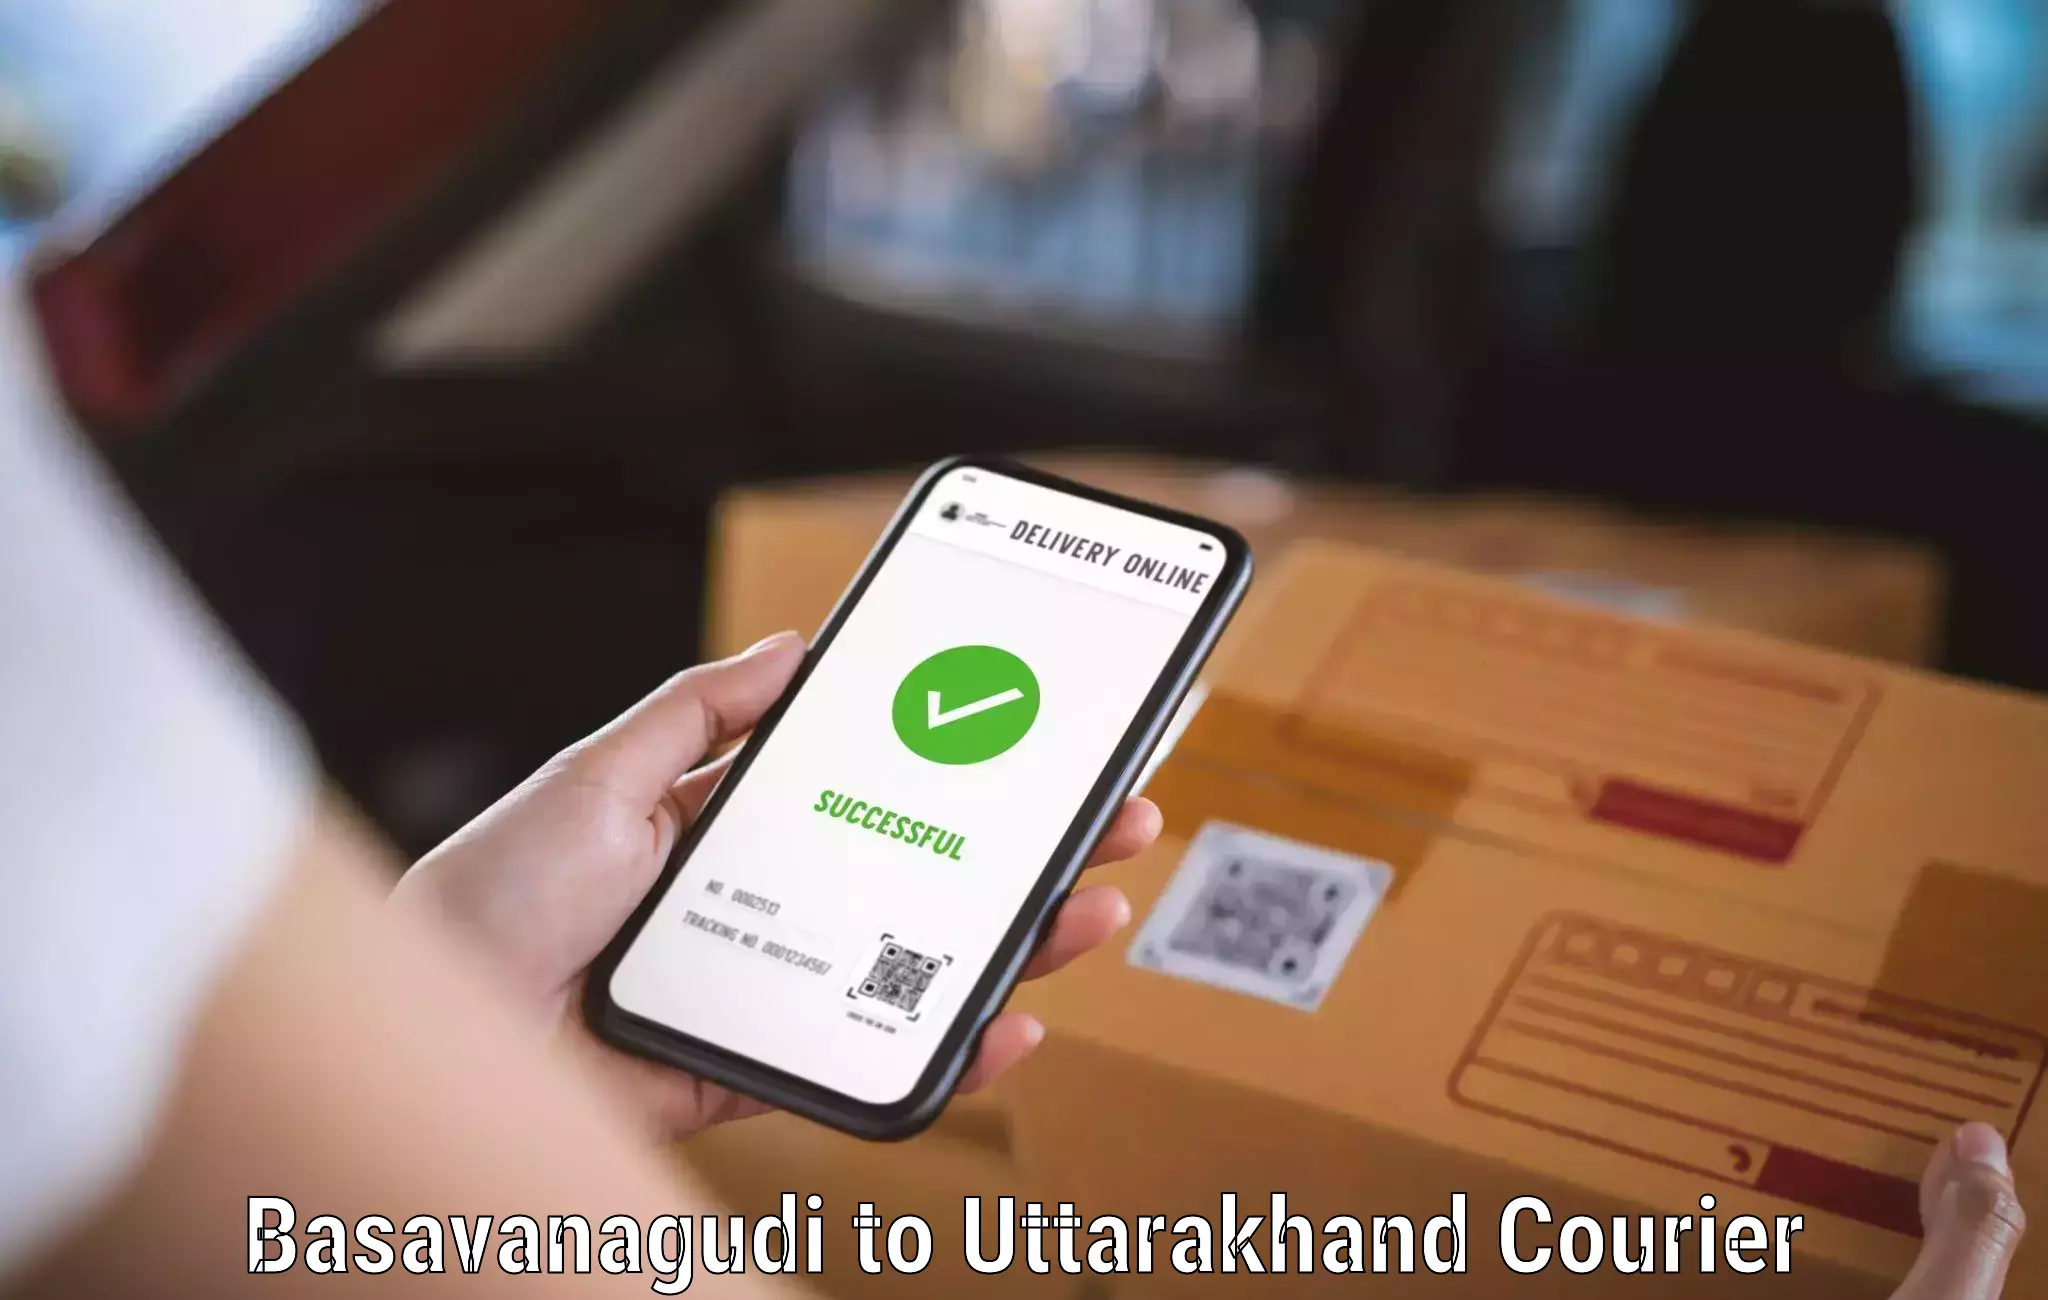 Nationwide parcel services Basavanagudi to Rishikesh